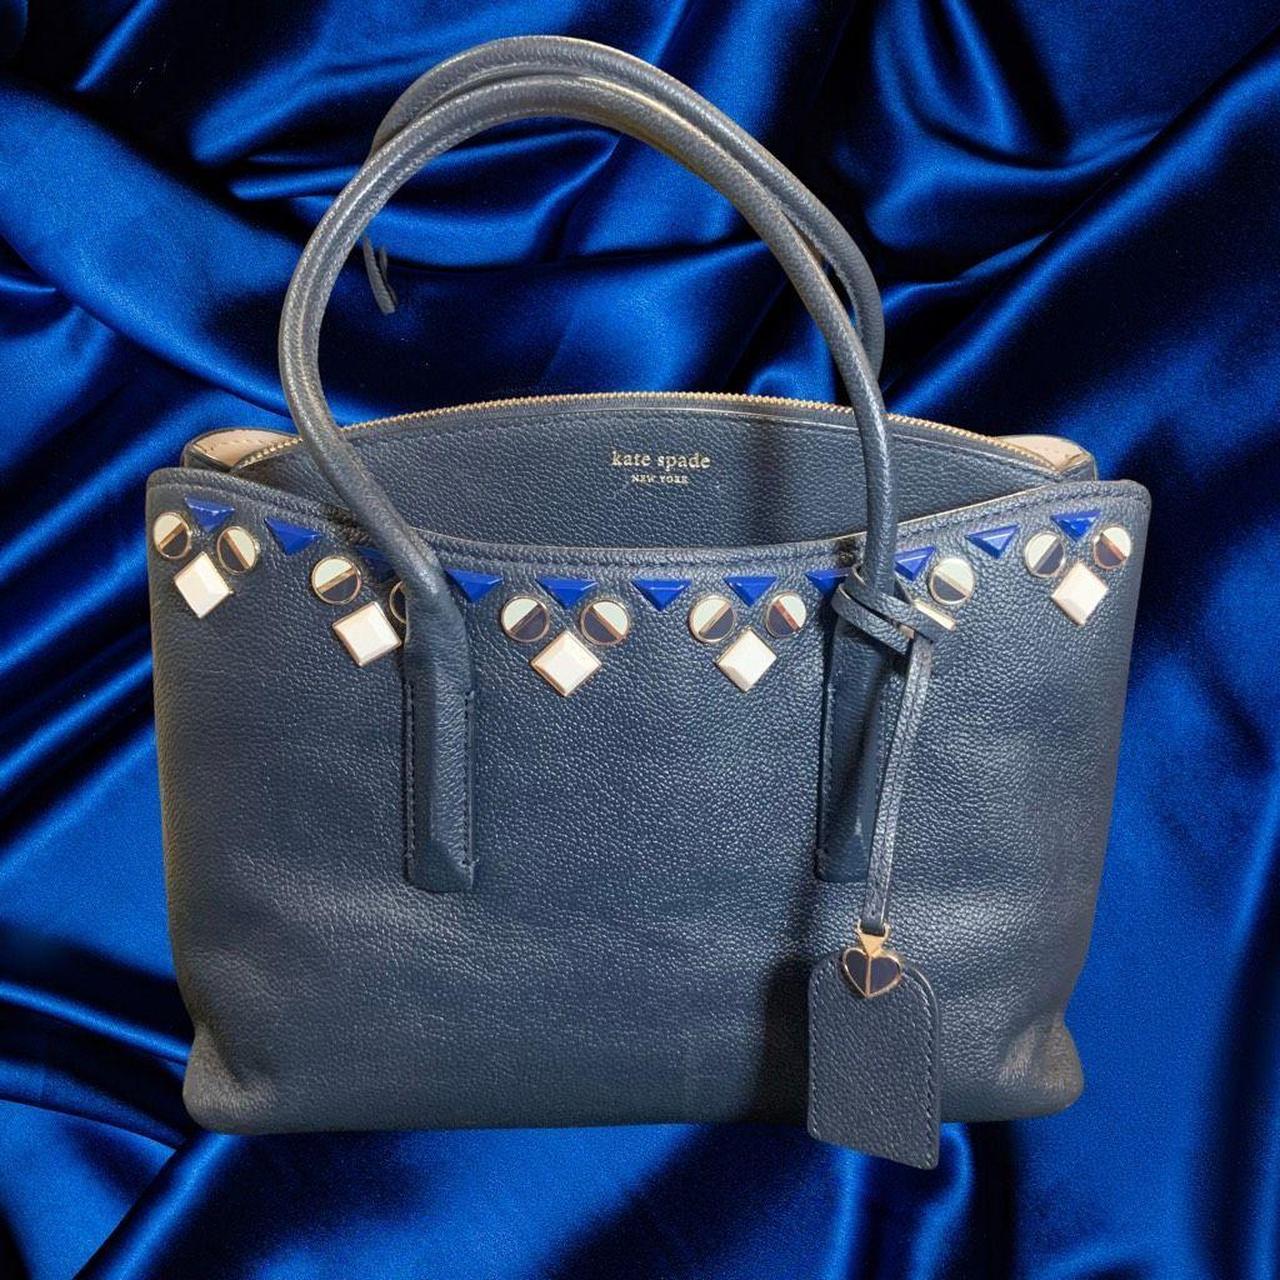 Kate Spade New York  Women's Blue Bag